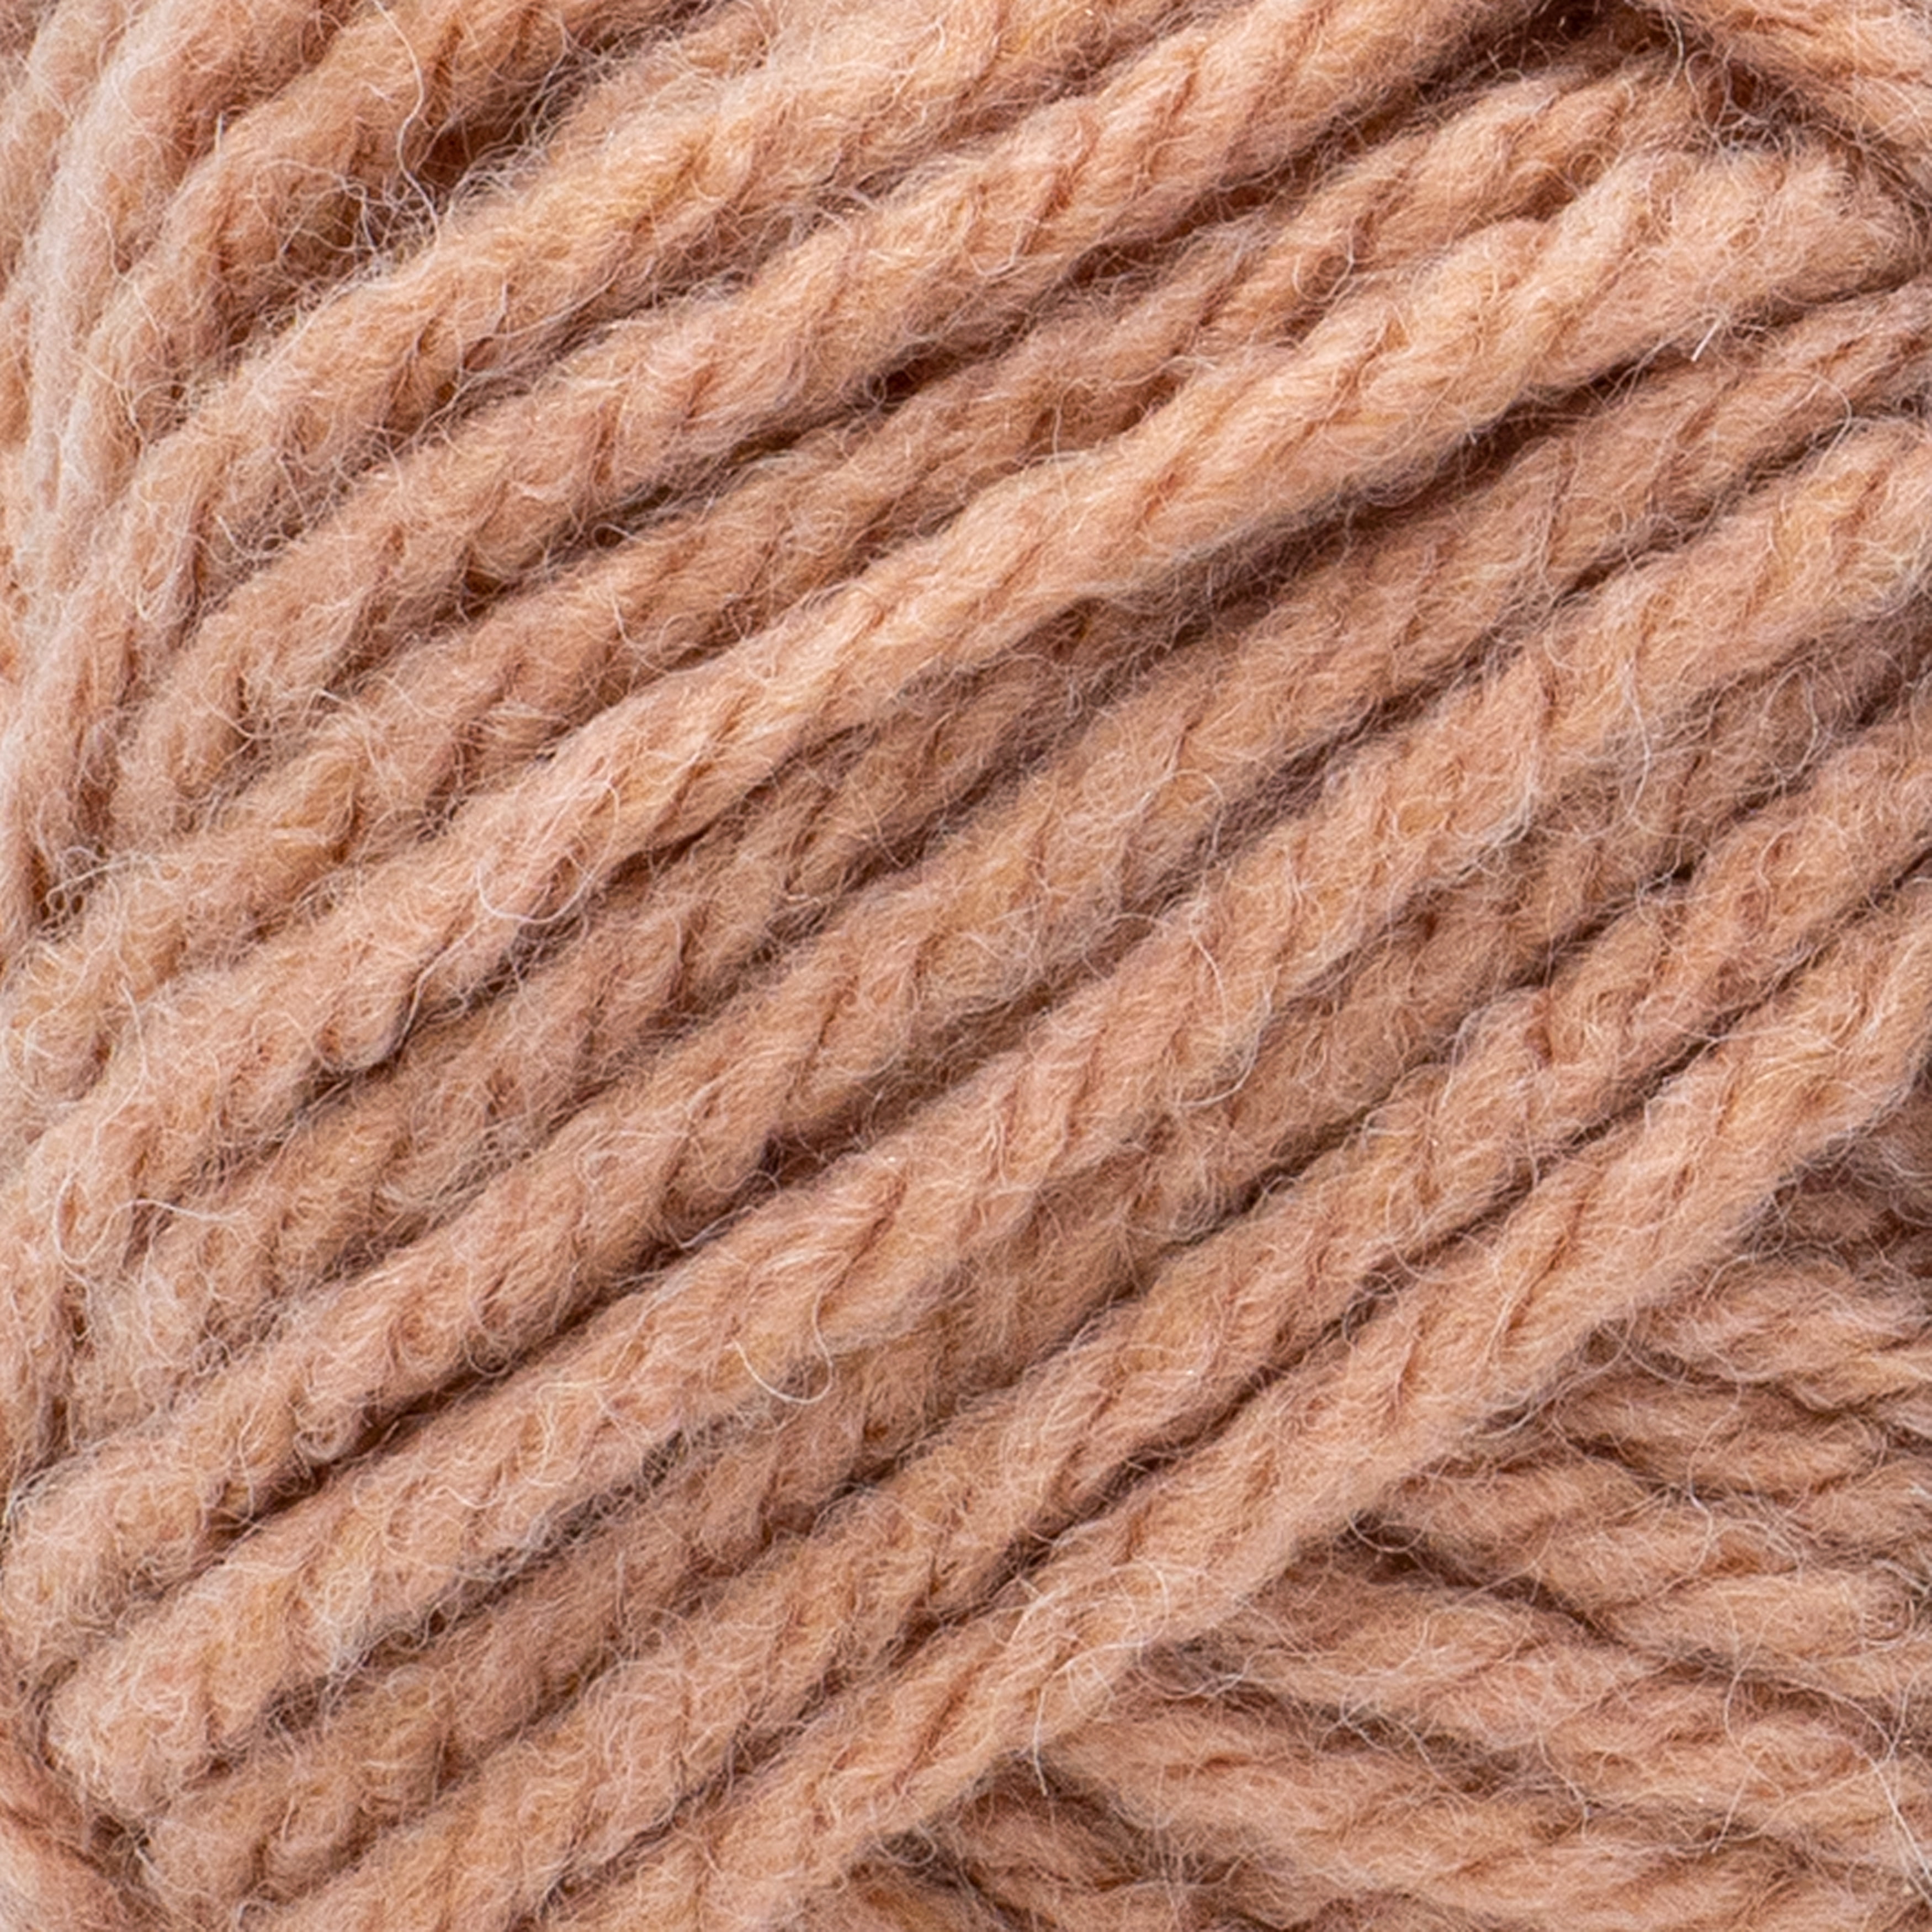 Lion Brand Yarn Two of Wands Hue + Me Arrowwood Wool Bulky Acrylic, Wool Brown Yarn 3 Pack